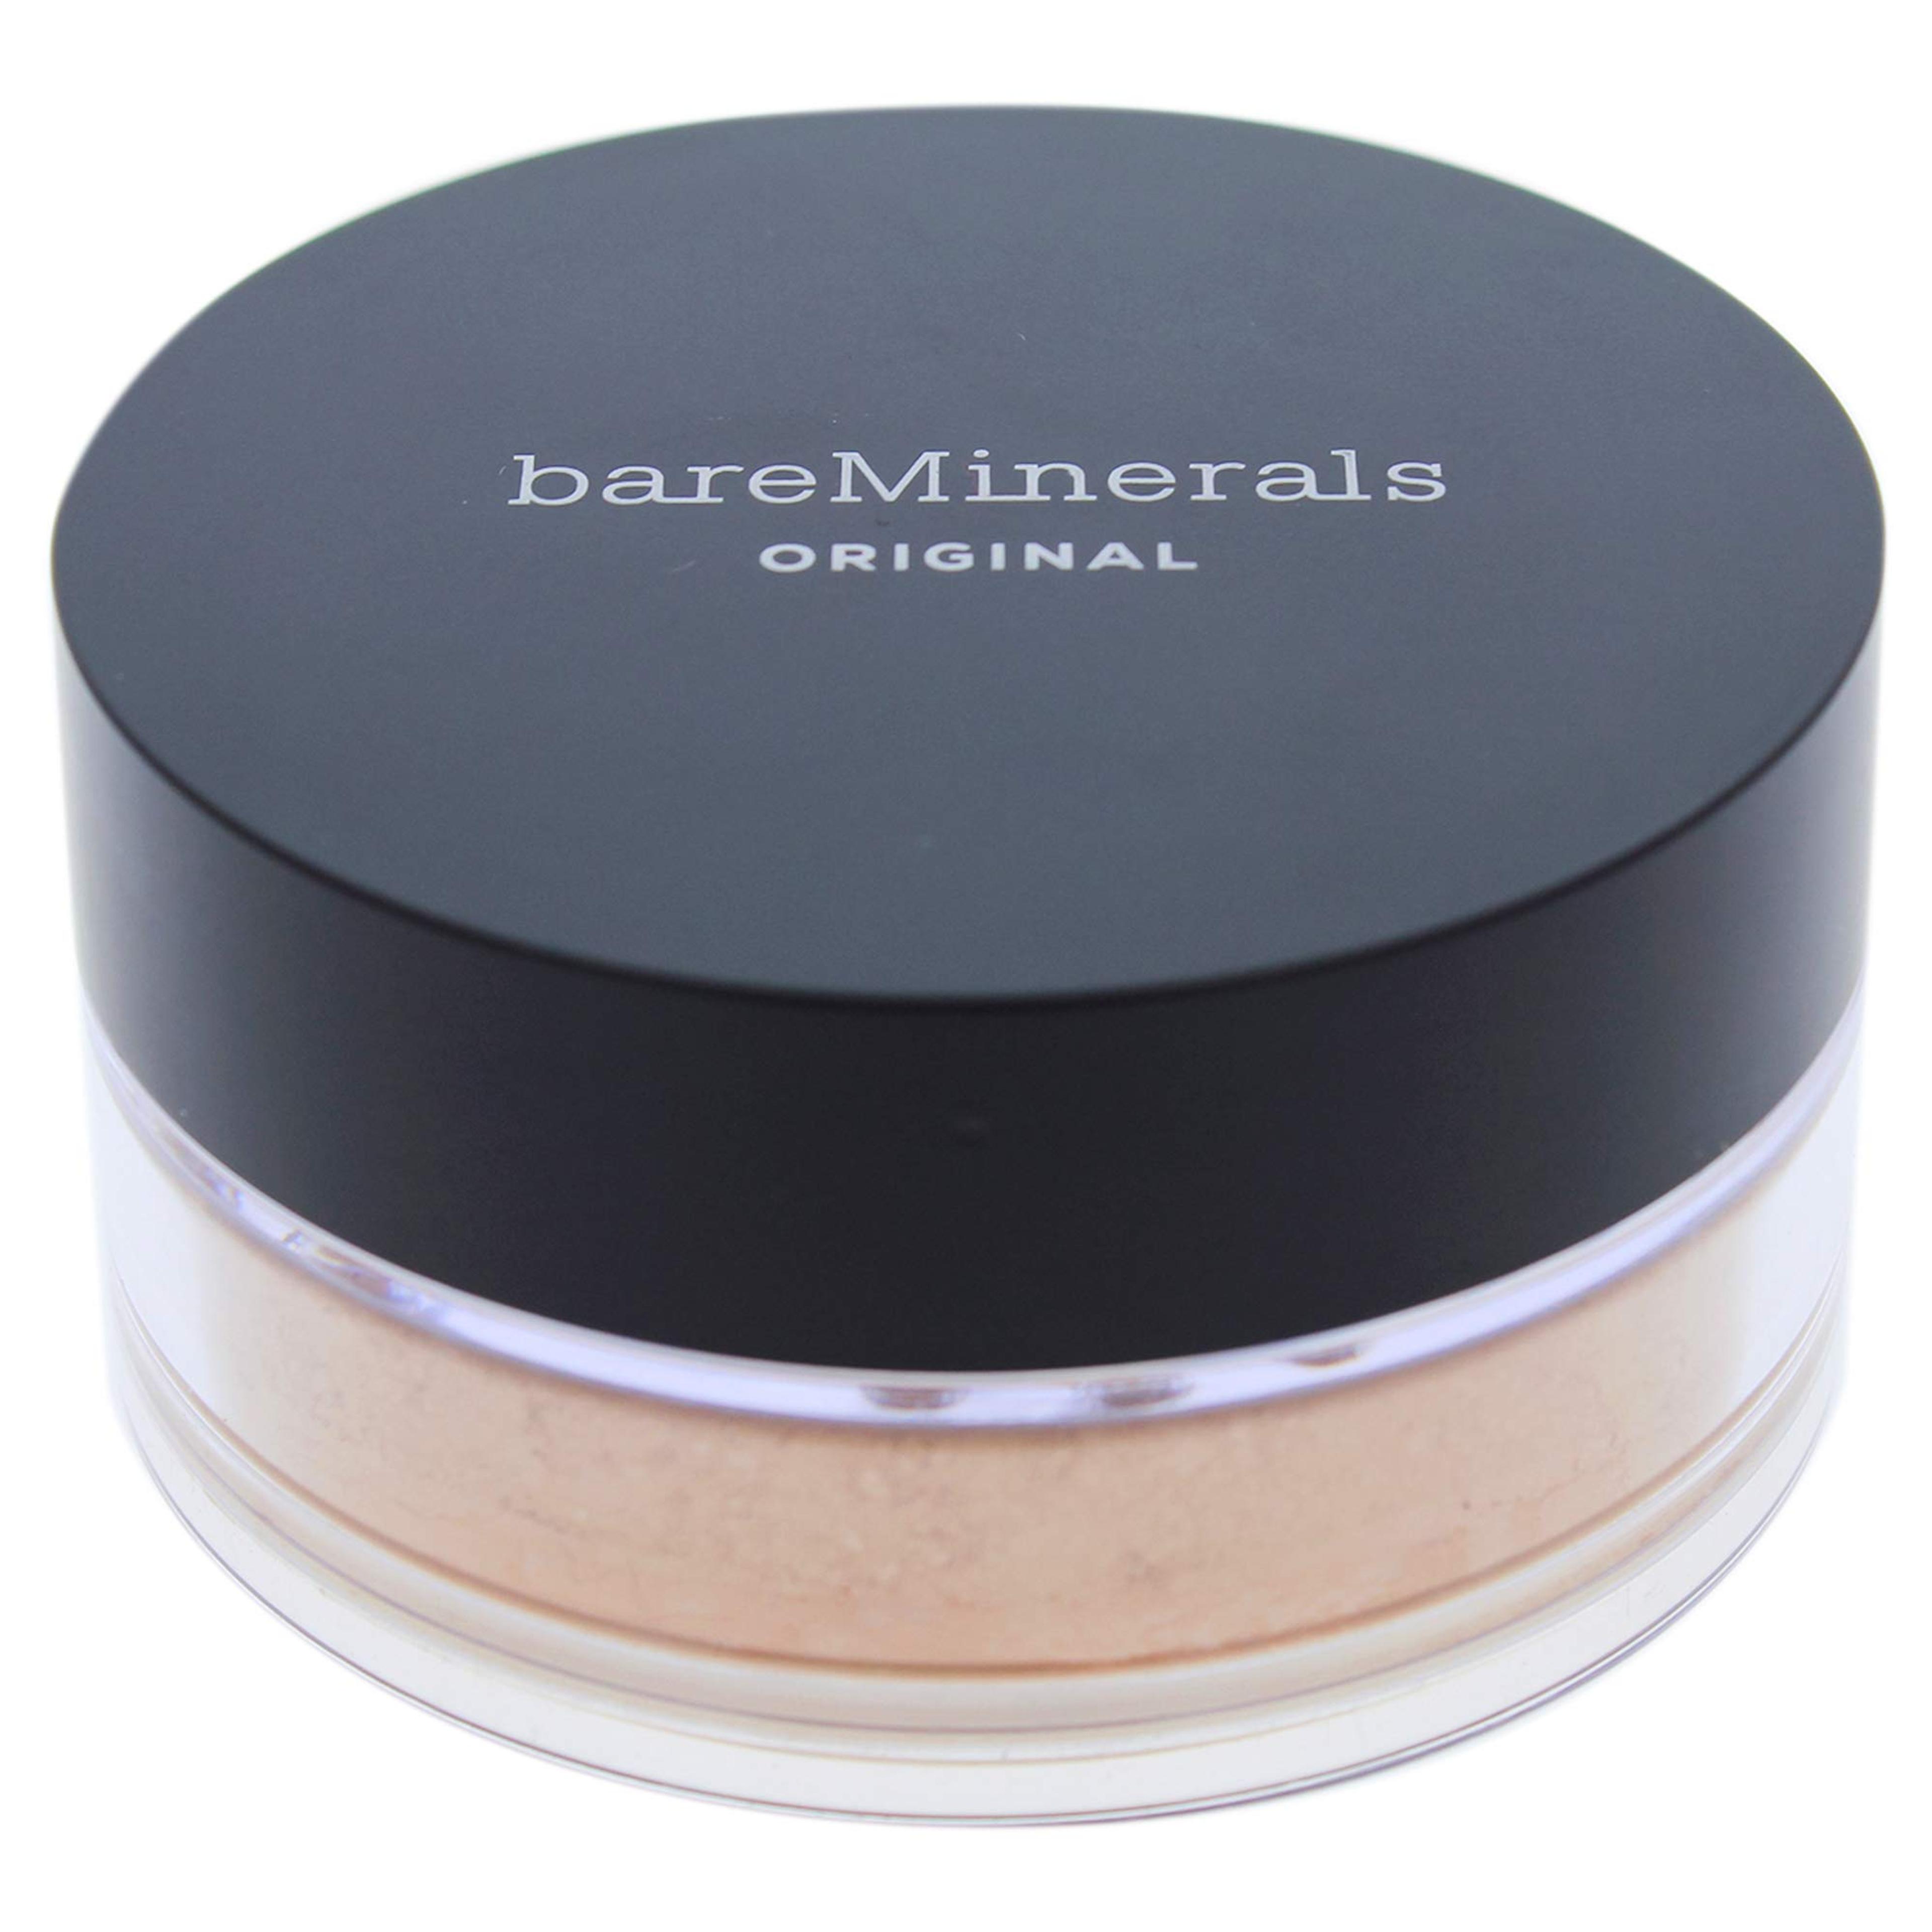 Amazon.com : bareMinerals Original Foundation, Medium Beige, 0.28 Ounce : Foundation Makeup : Beauty & Personal Care